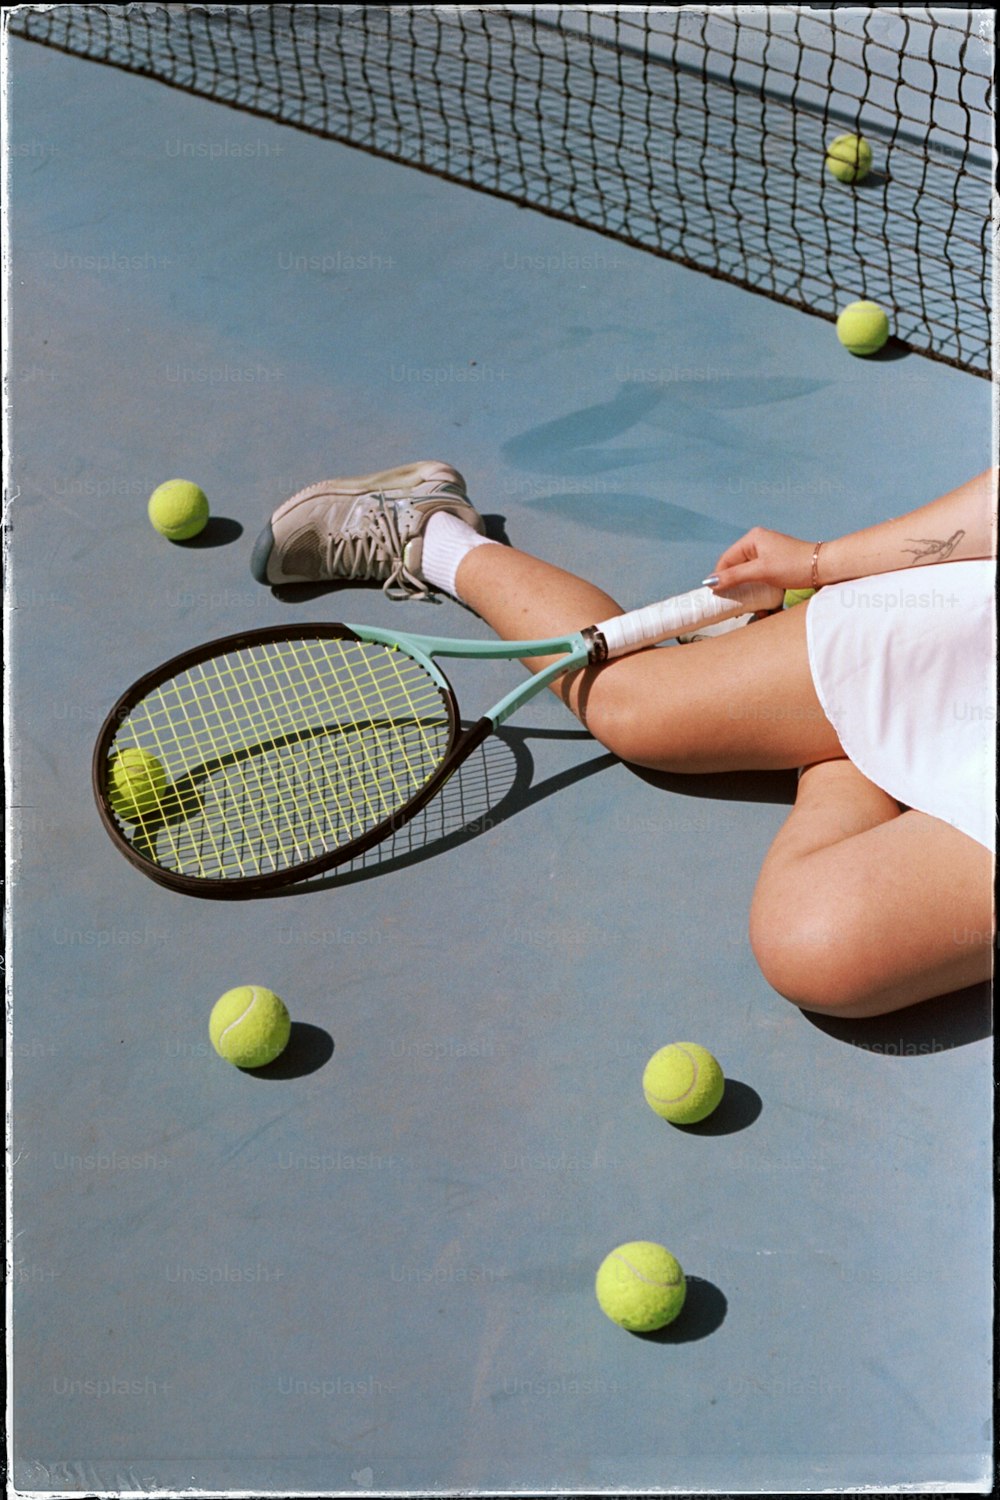 a woman sitting on a tennis court holding a tennis racquet